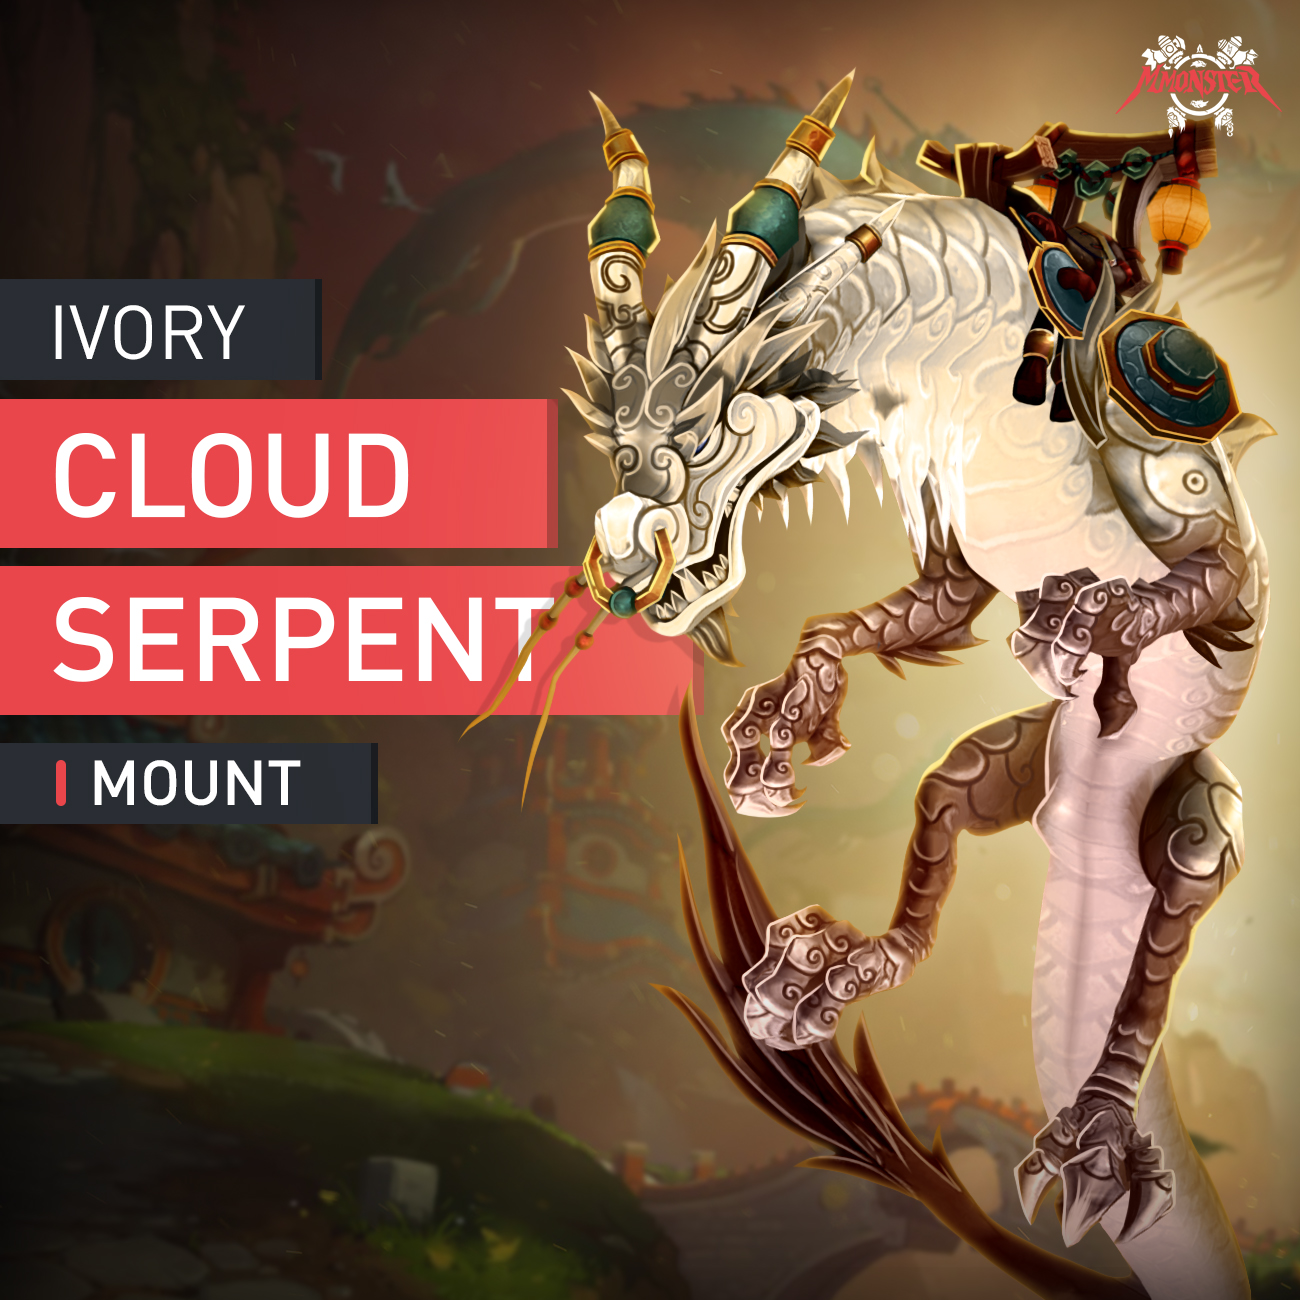 Ivory Cloud Serpent Mount